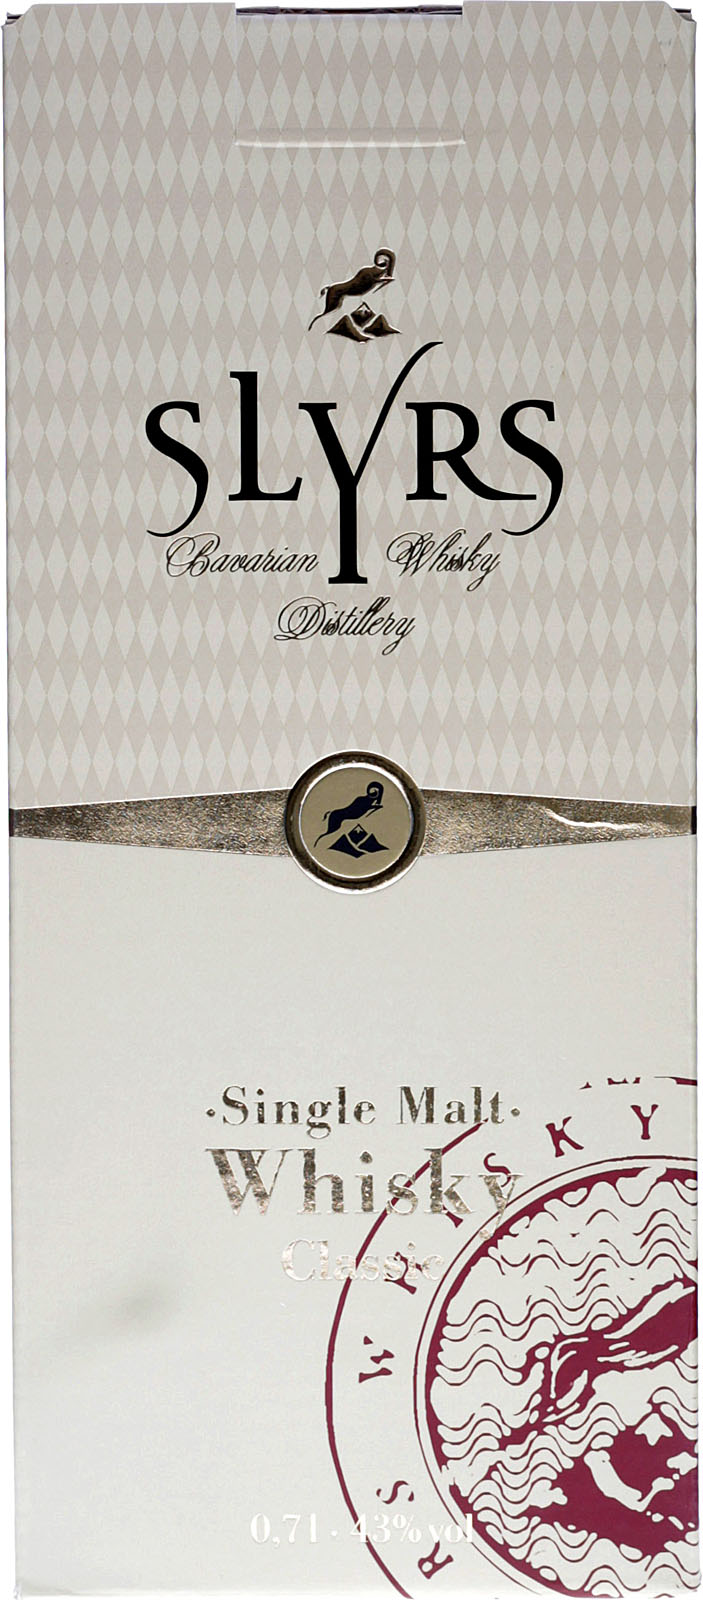 Slyrs bavarian single malt whiskey